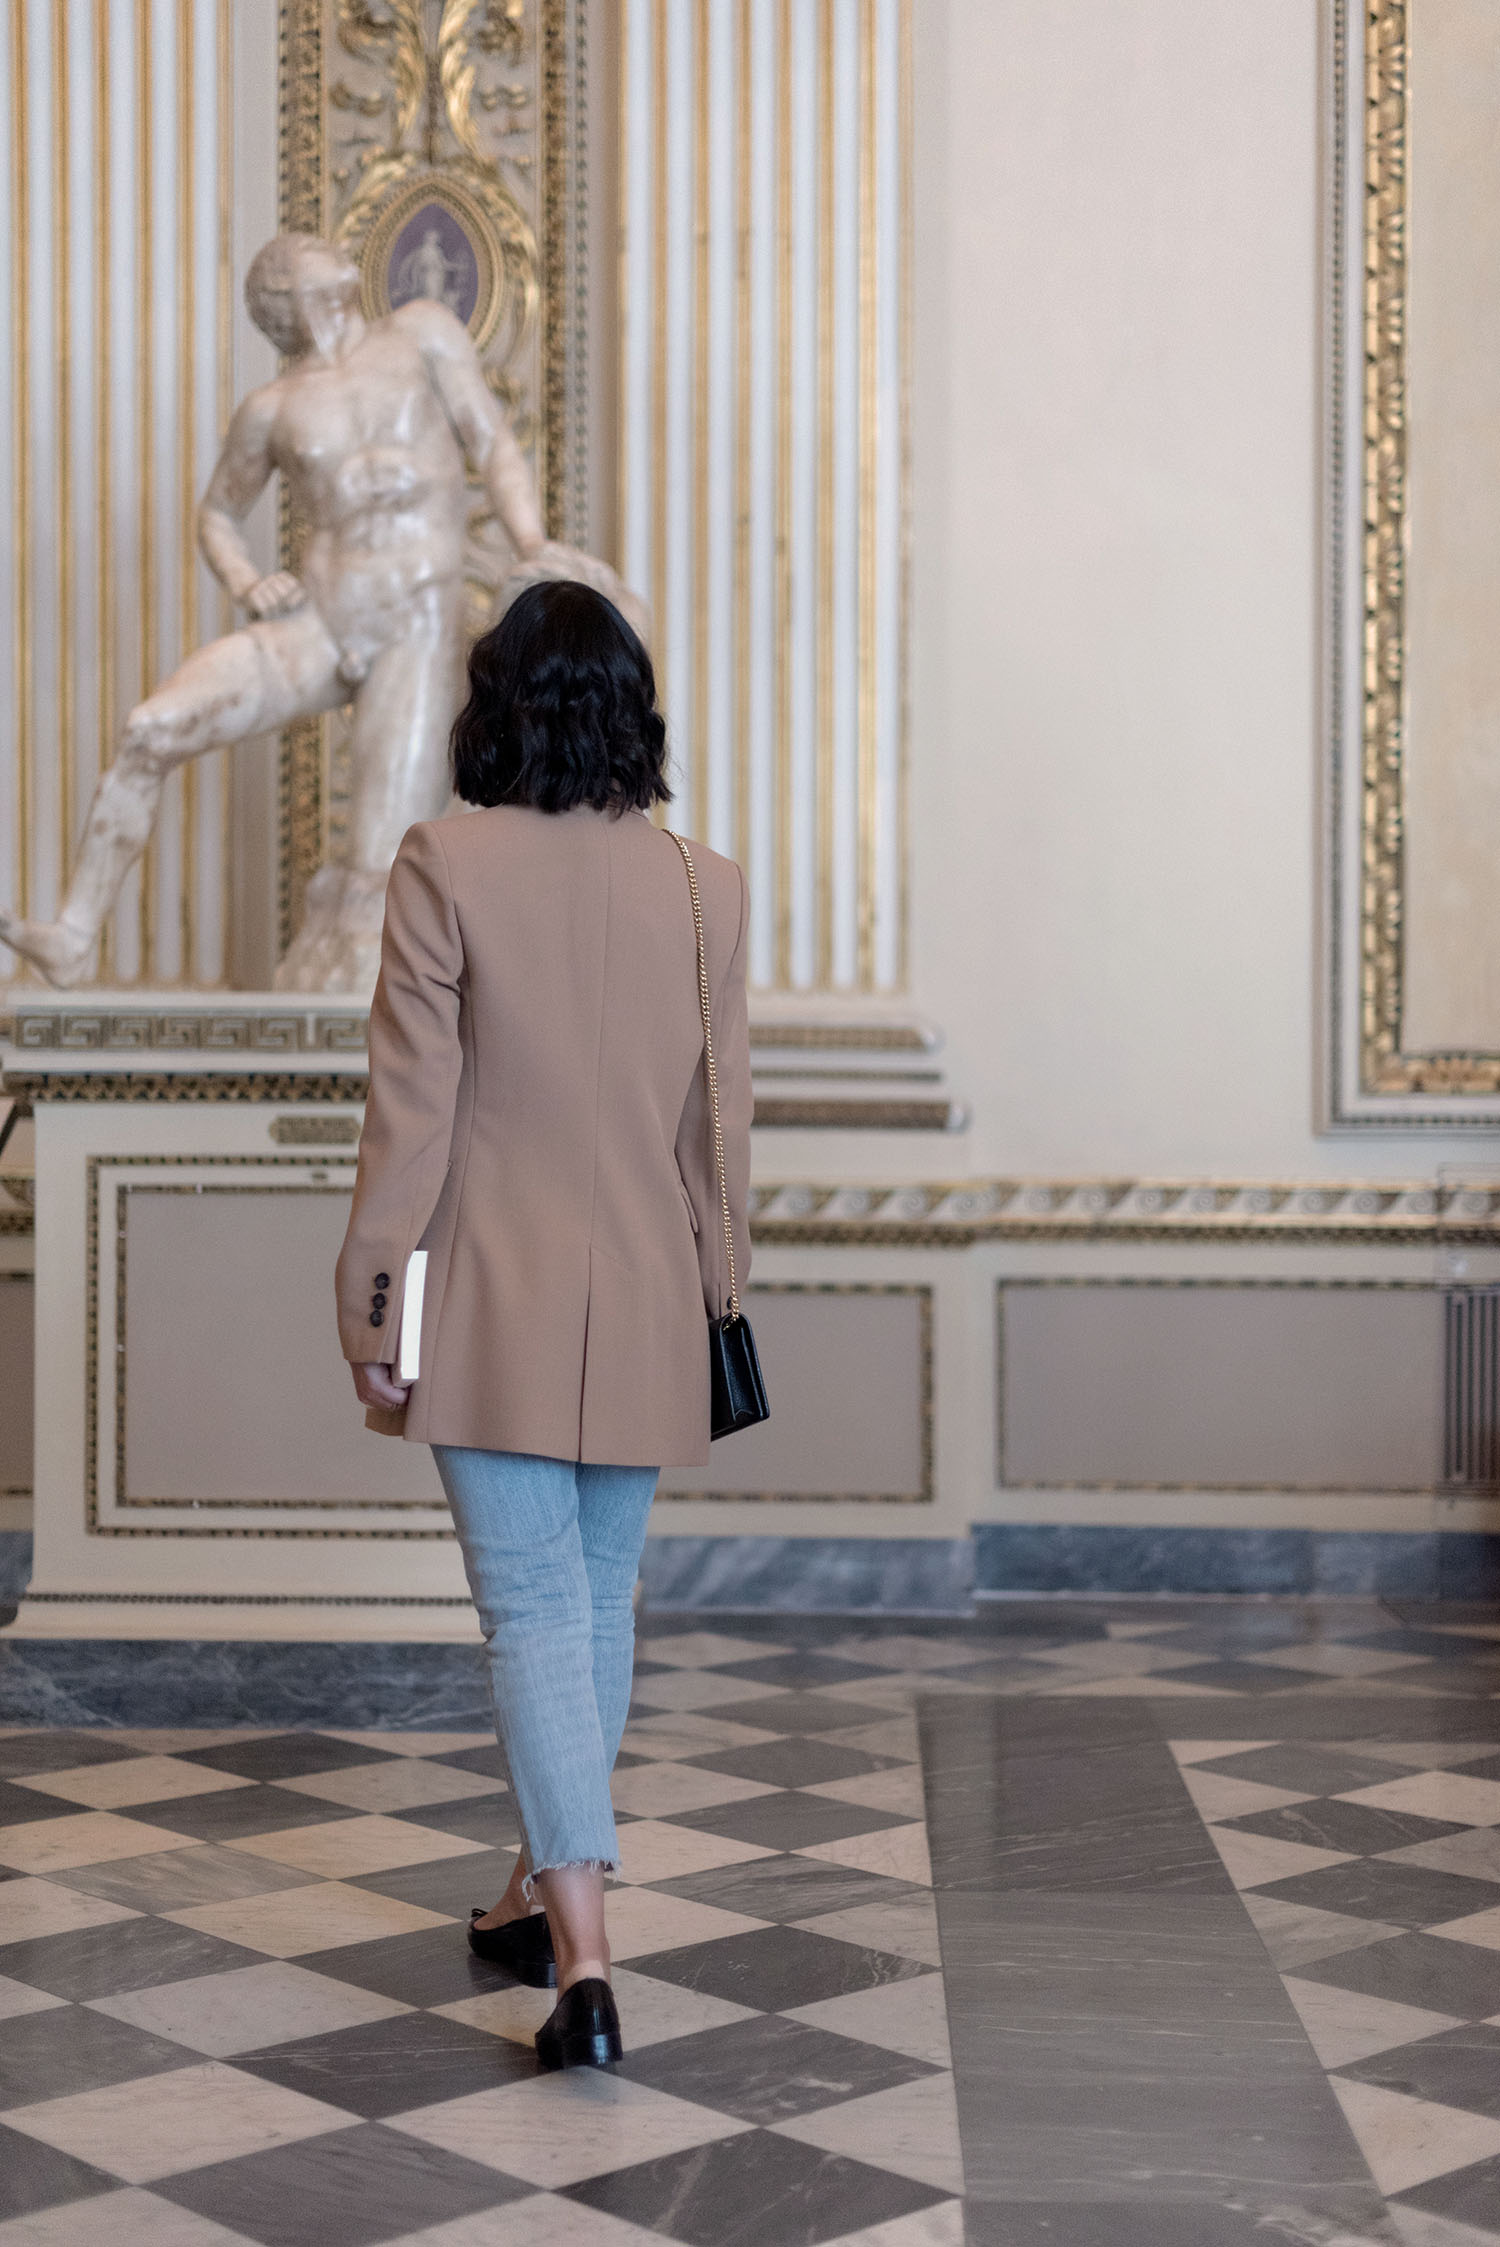 Top Winnipeg travel blogger Cee Fardoe of Coco & Vera walks in the Uffizi Gallery in Florence, Italy, wearing Levi's jeans and a Zara camel blazer